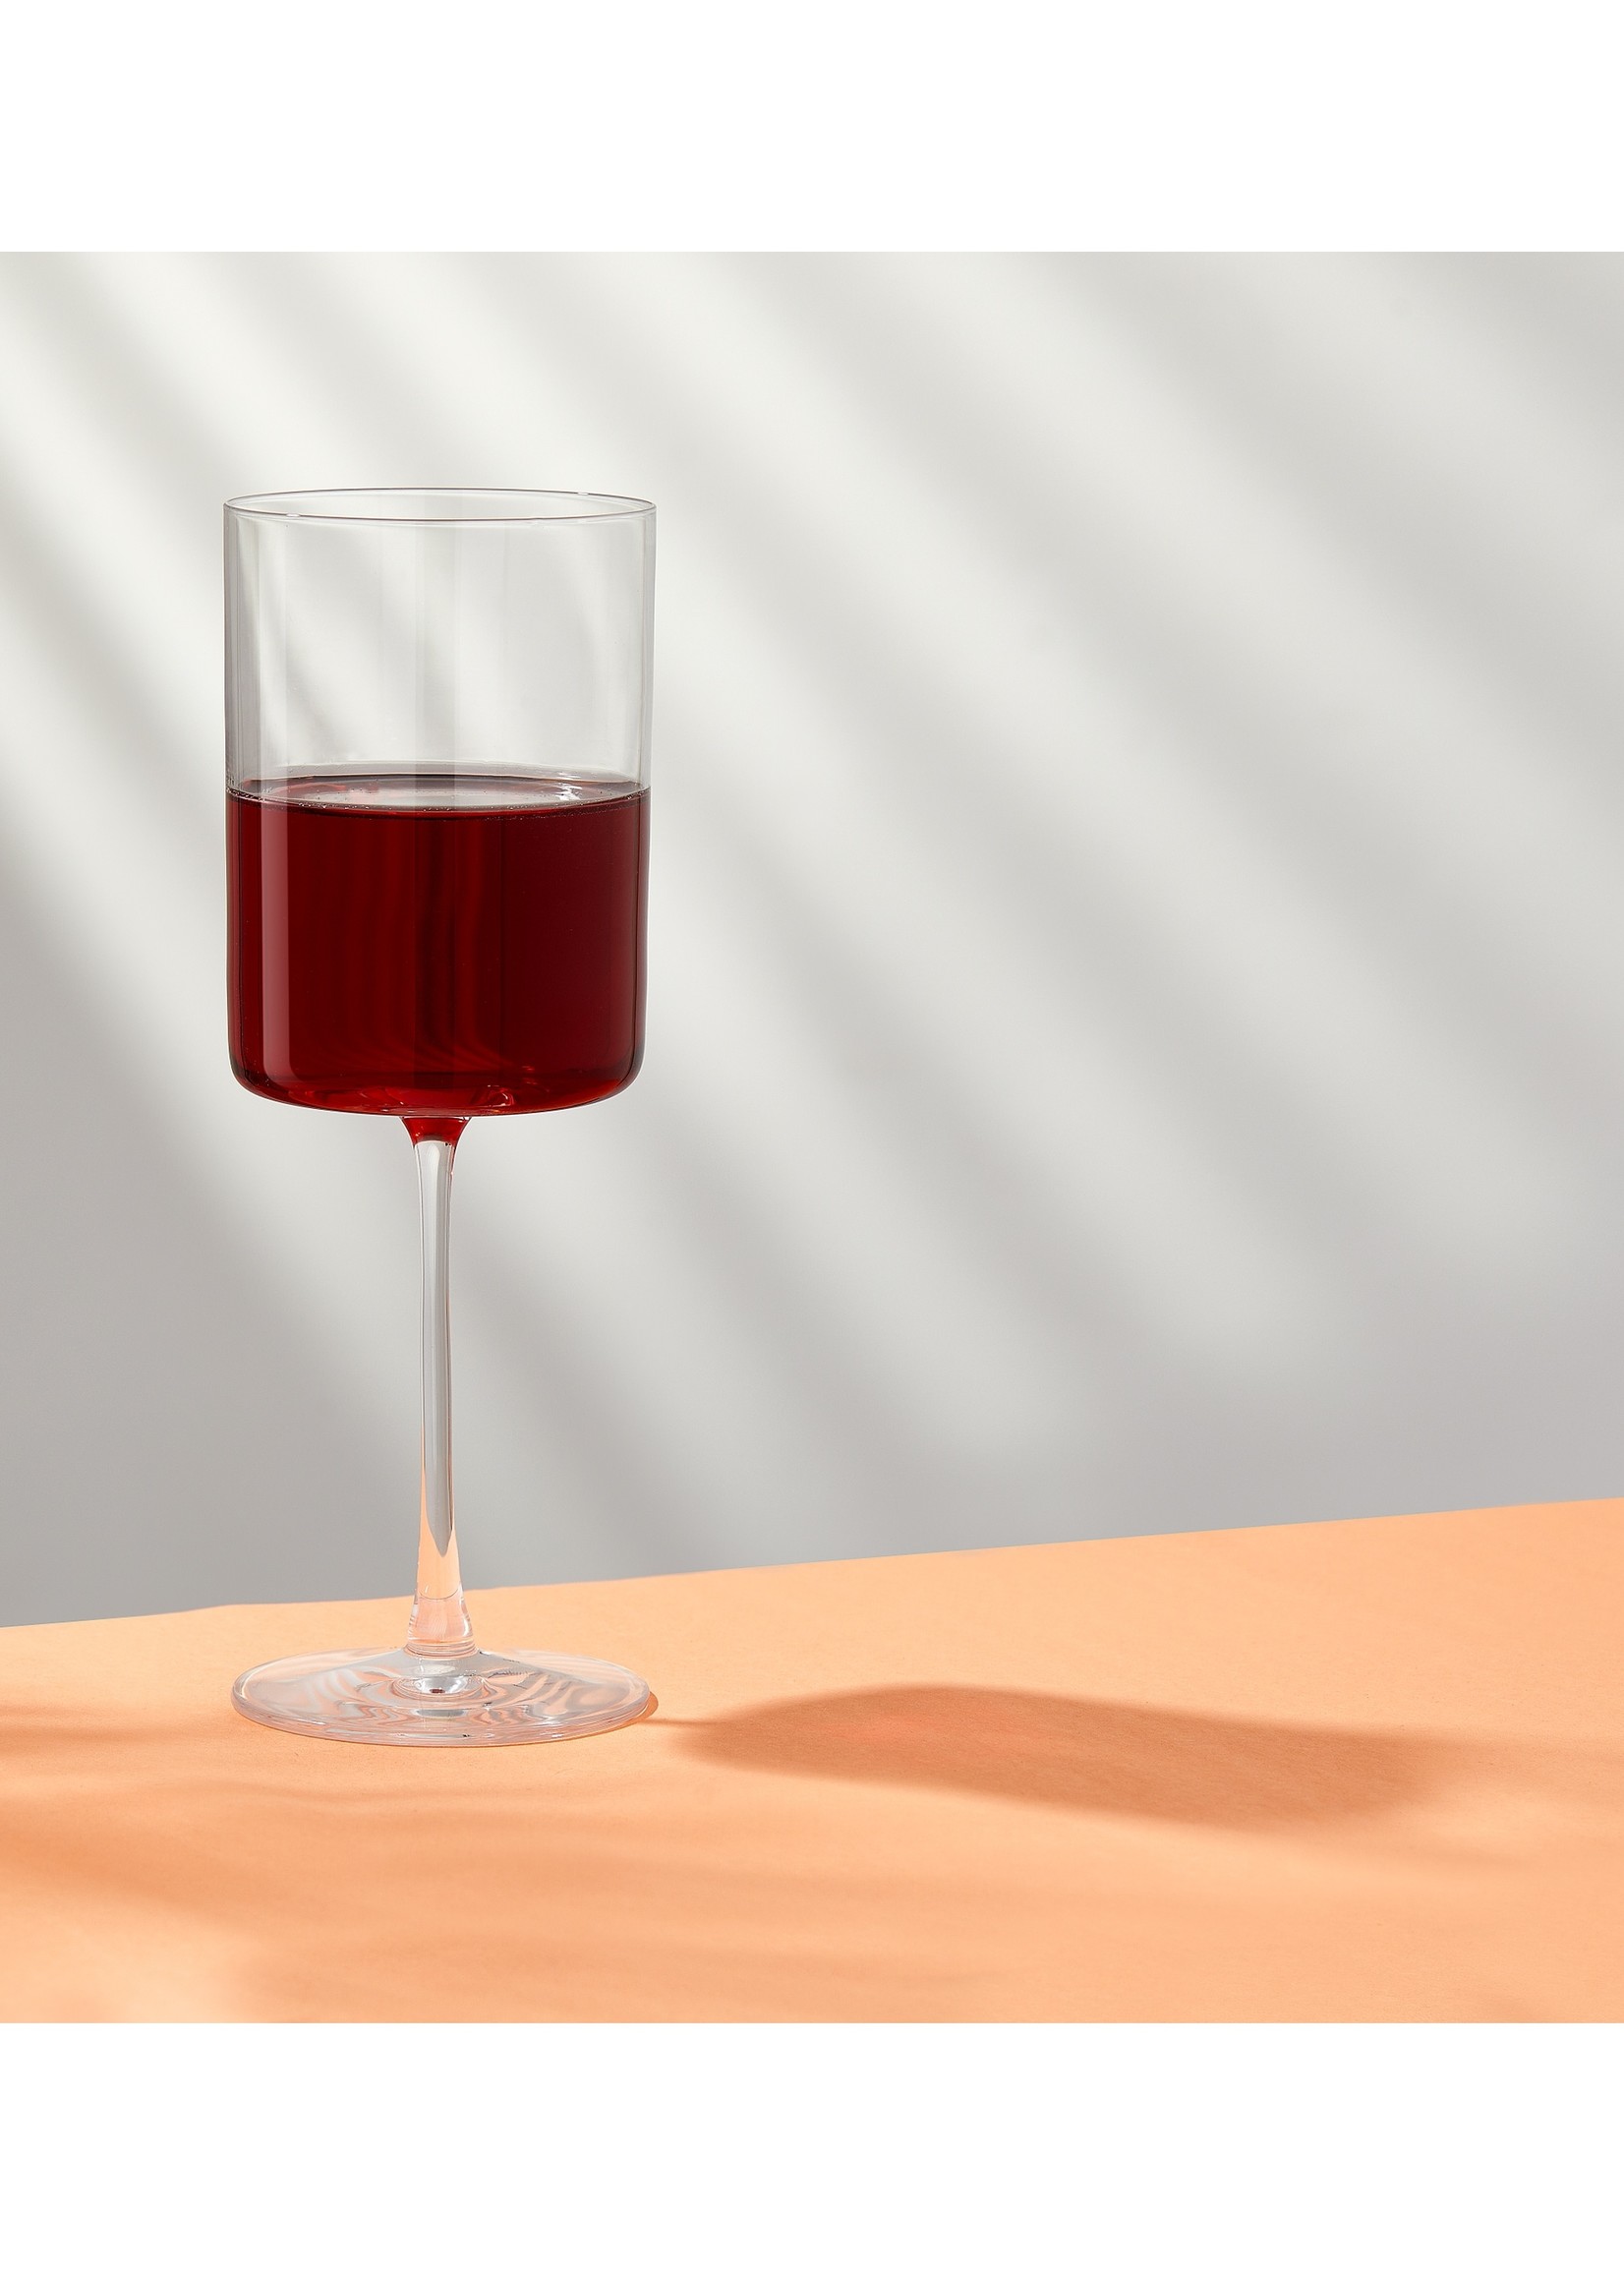 JoyJolt Claire Red Wine Glasses, 14 Oz Set of 2  Lead-Free Crystal